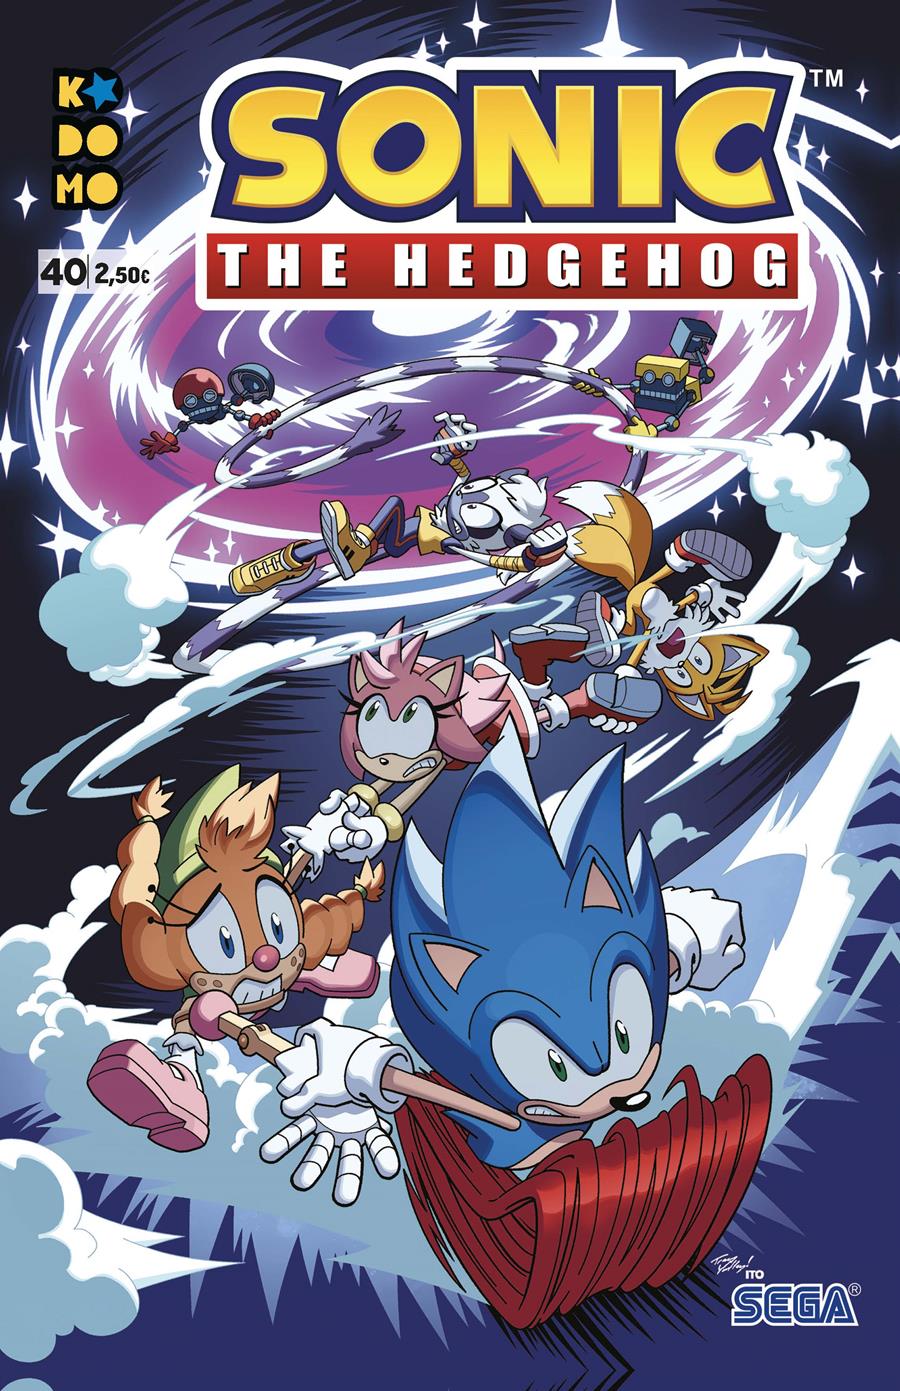 Sonic The Hedgehog núm. 40 | N1122-ECC52 | Bracardy Curry / Evan Stanley / Evan Stanley | Terra de Còmic - Tu tienda de cómics online especializada en cómics, manga y merchandising